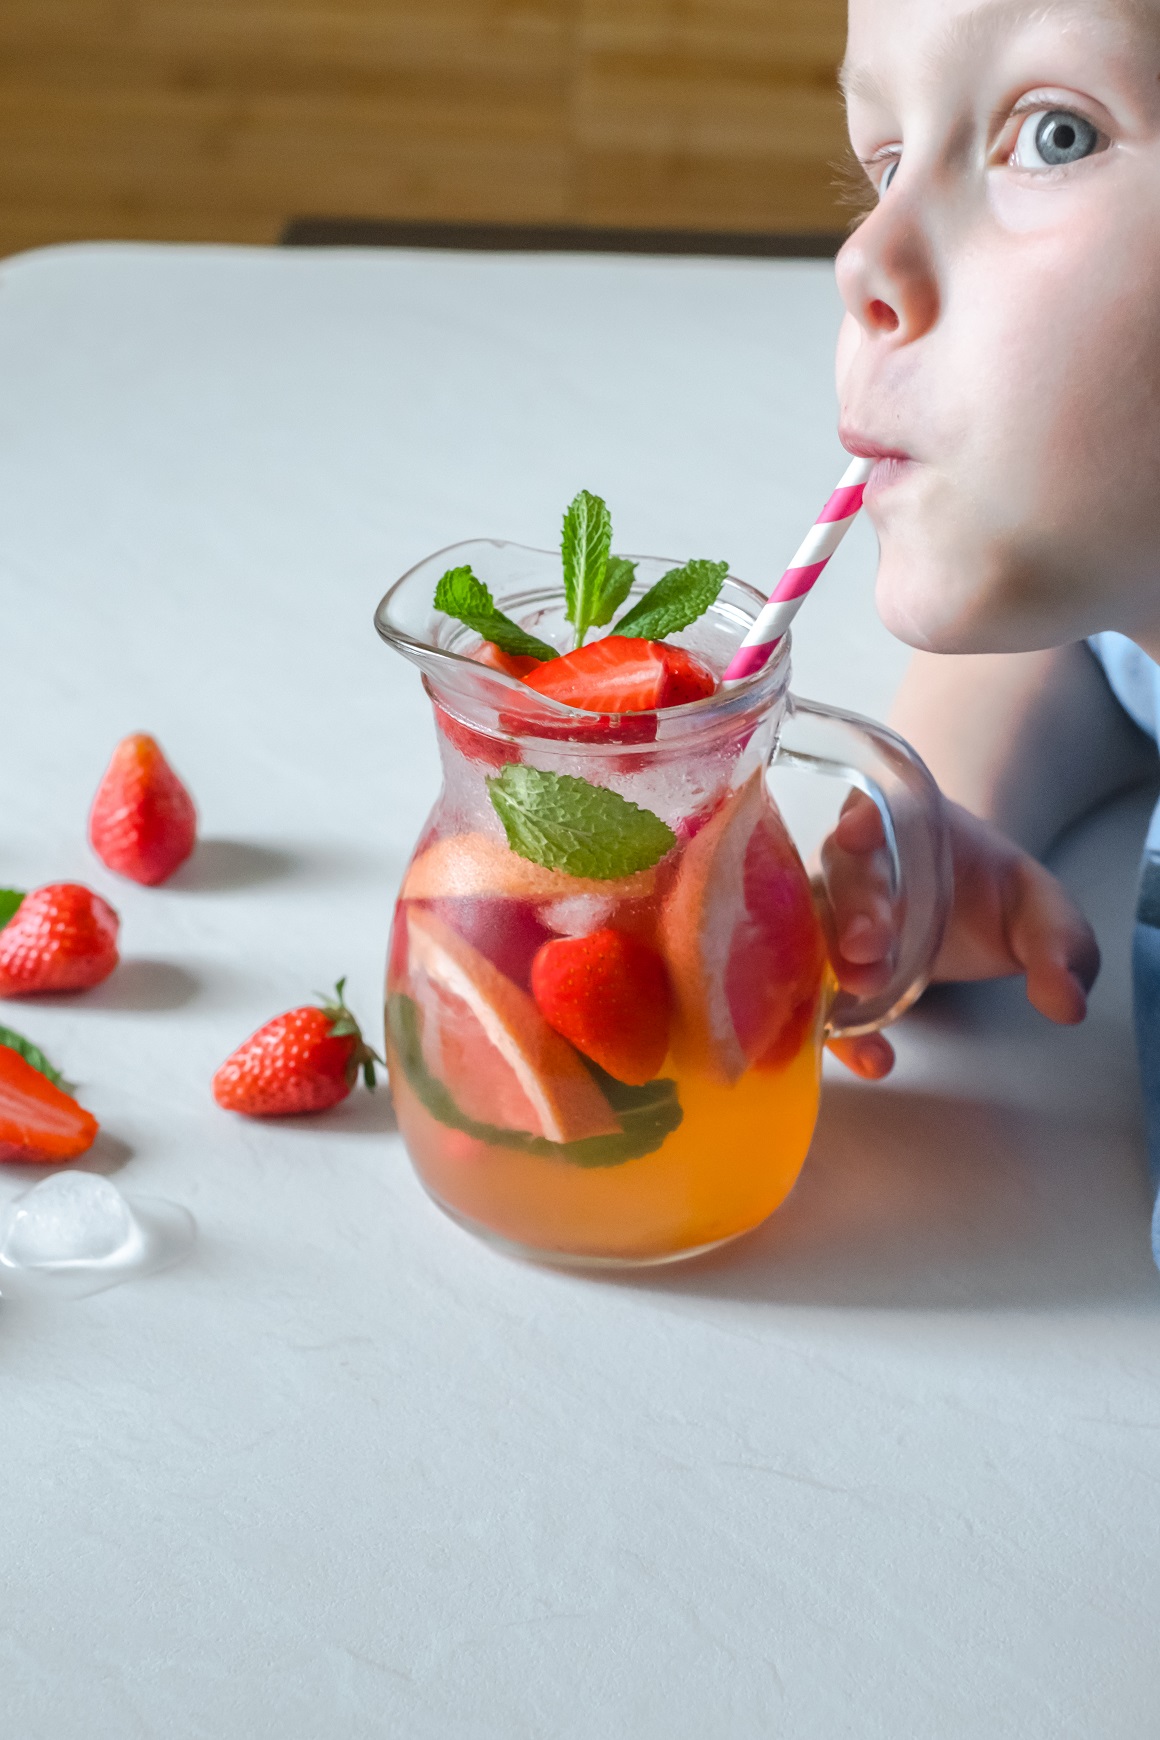 Ledeni čaj zdrav je napitak i za djecu